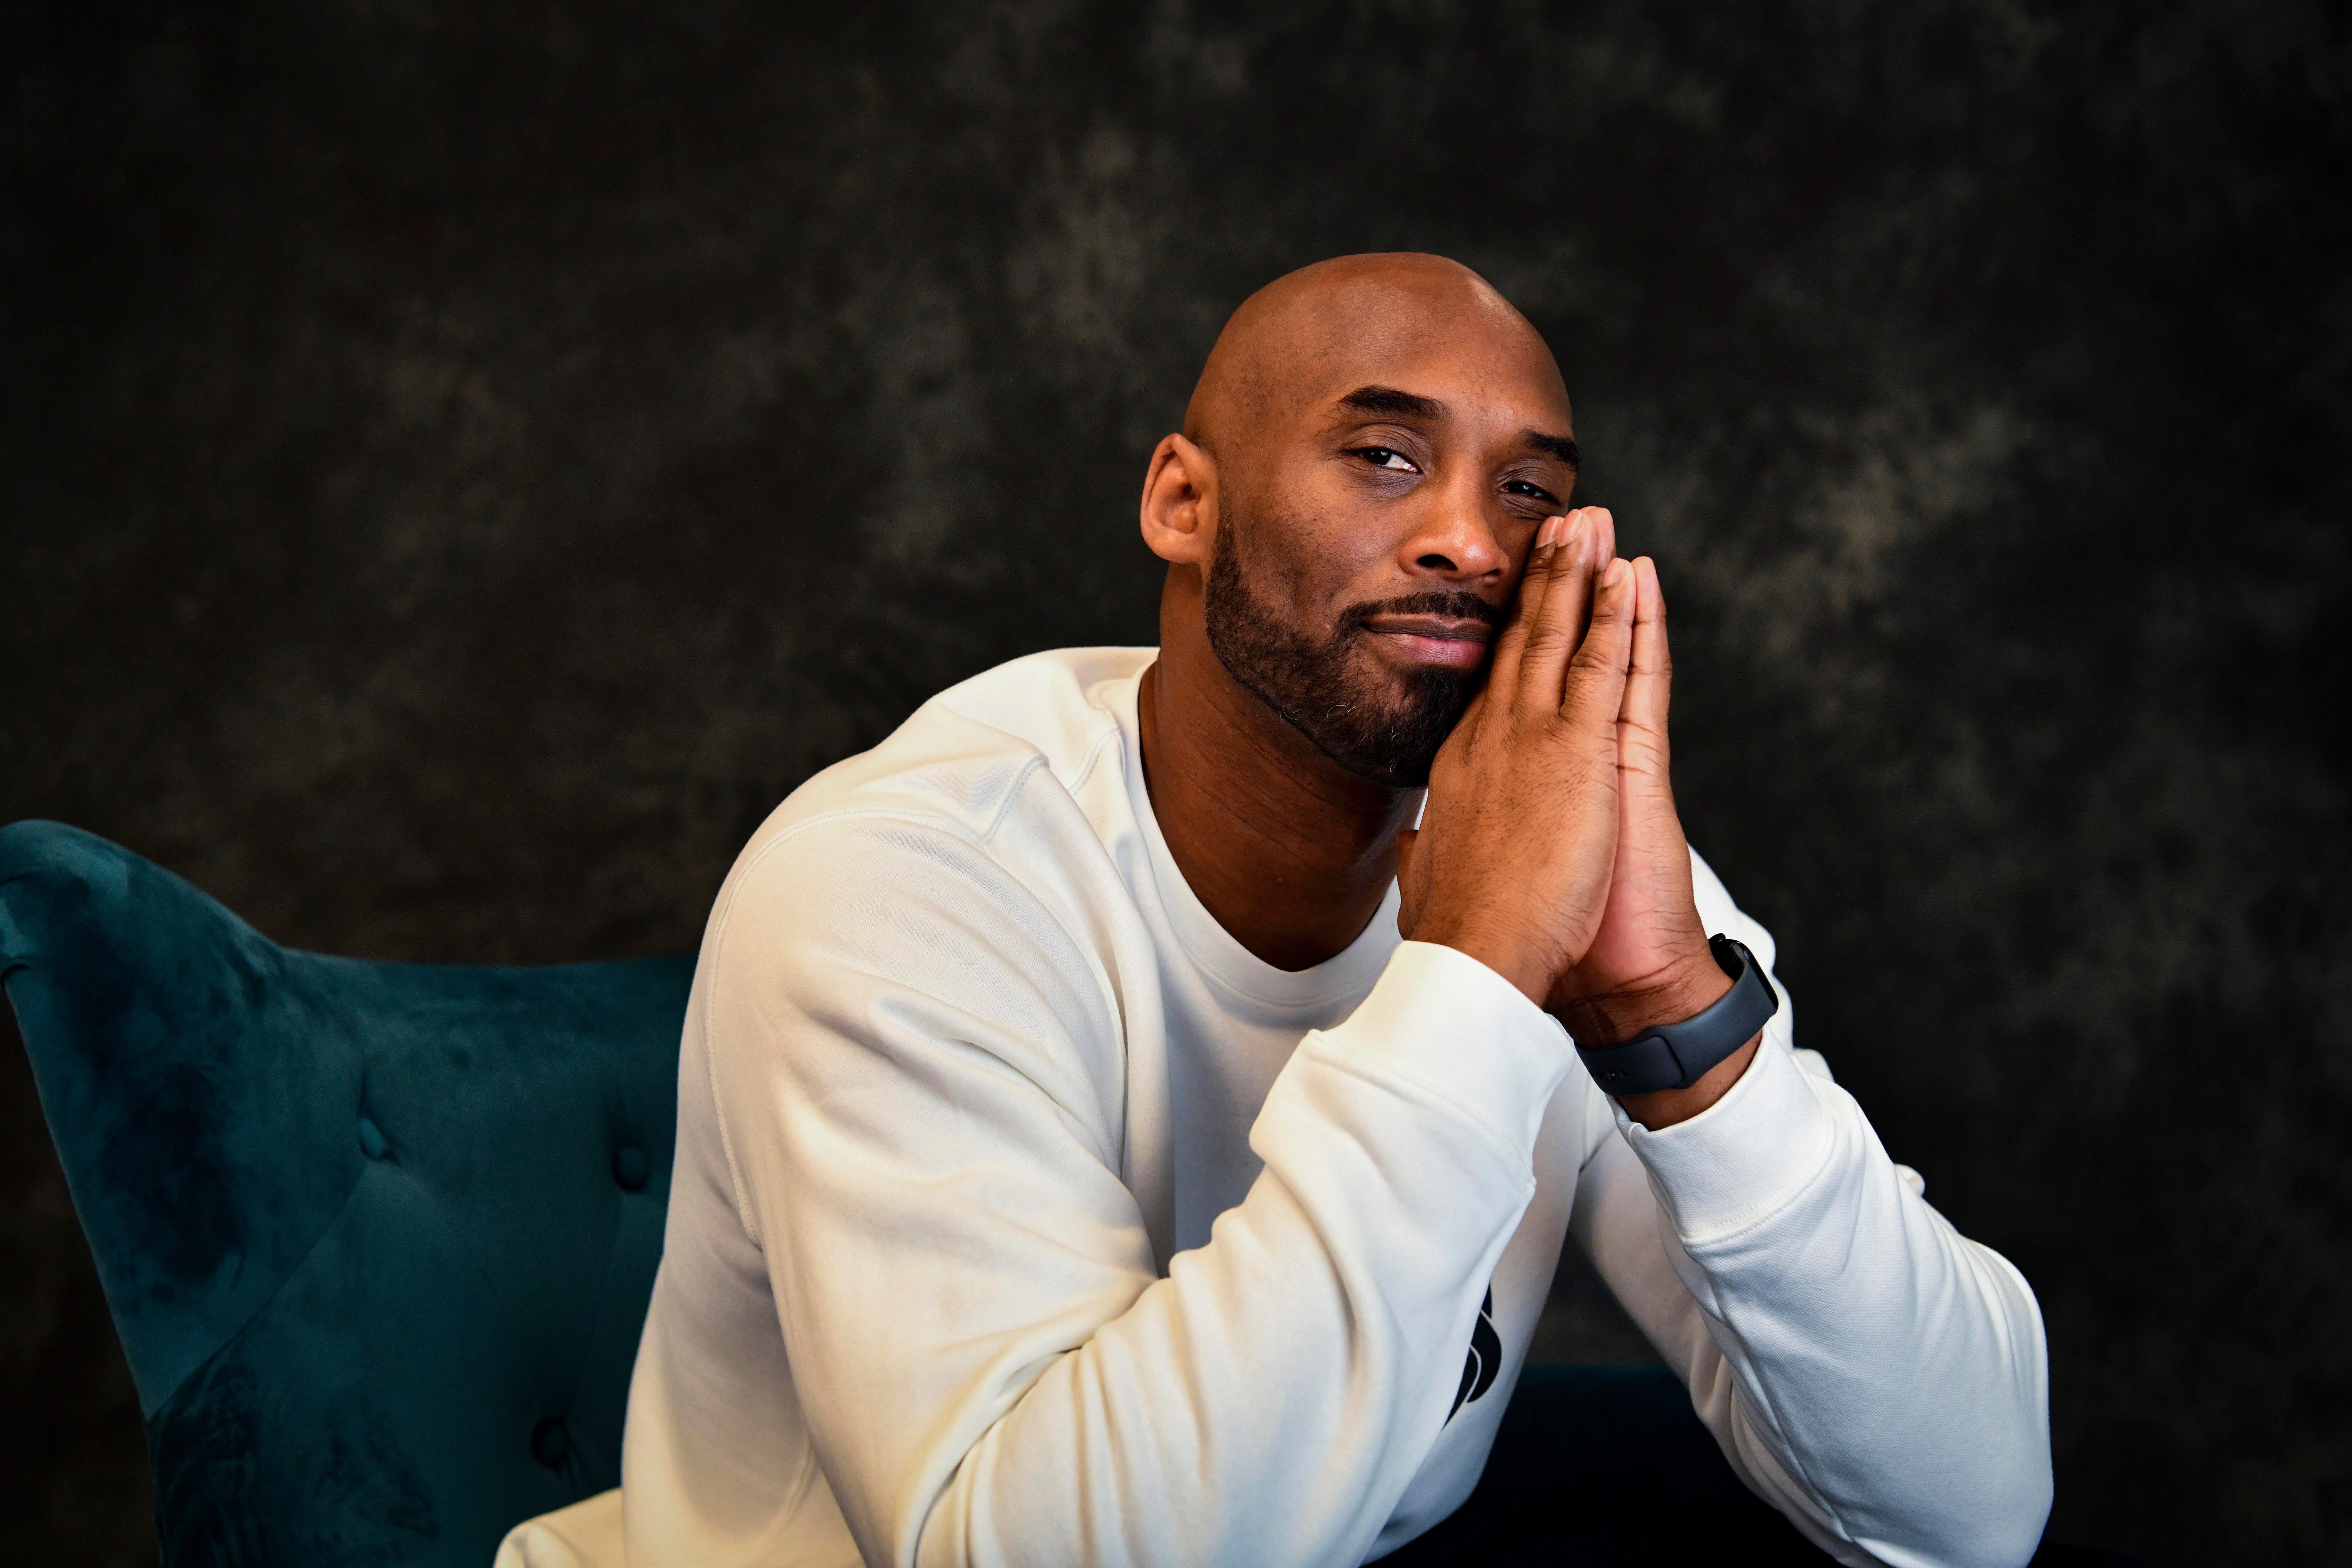 He was idolized': Coach K remembers Kobe Bryant as an icon, friend